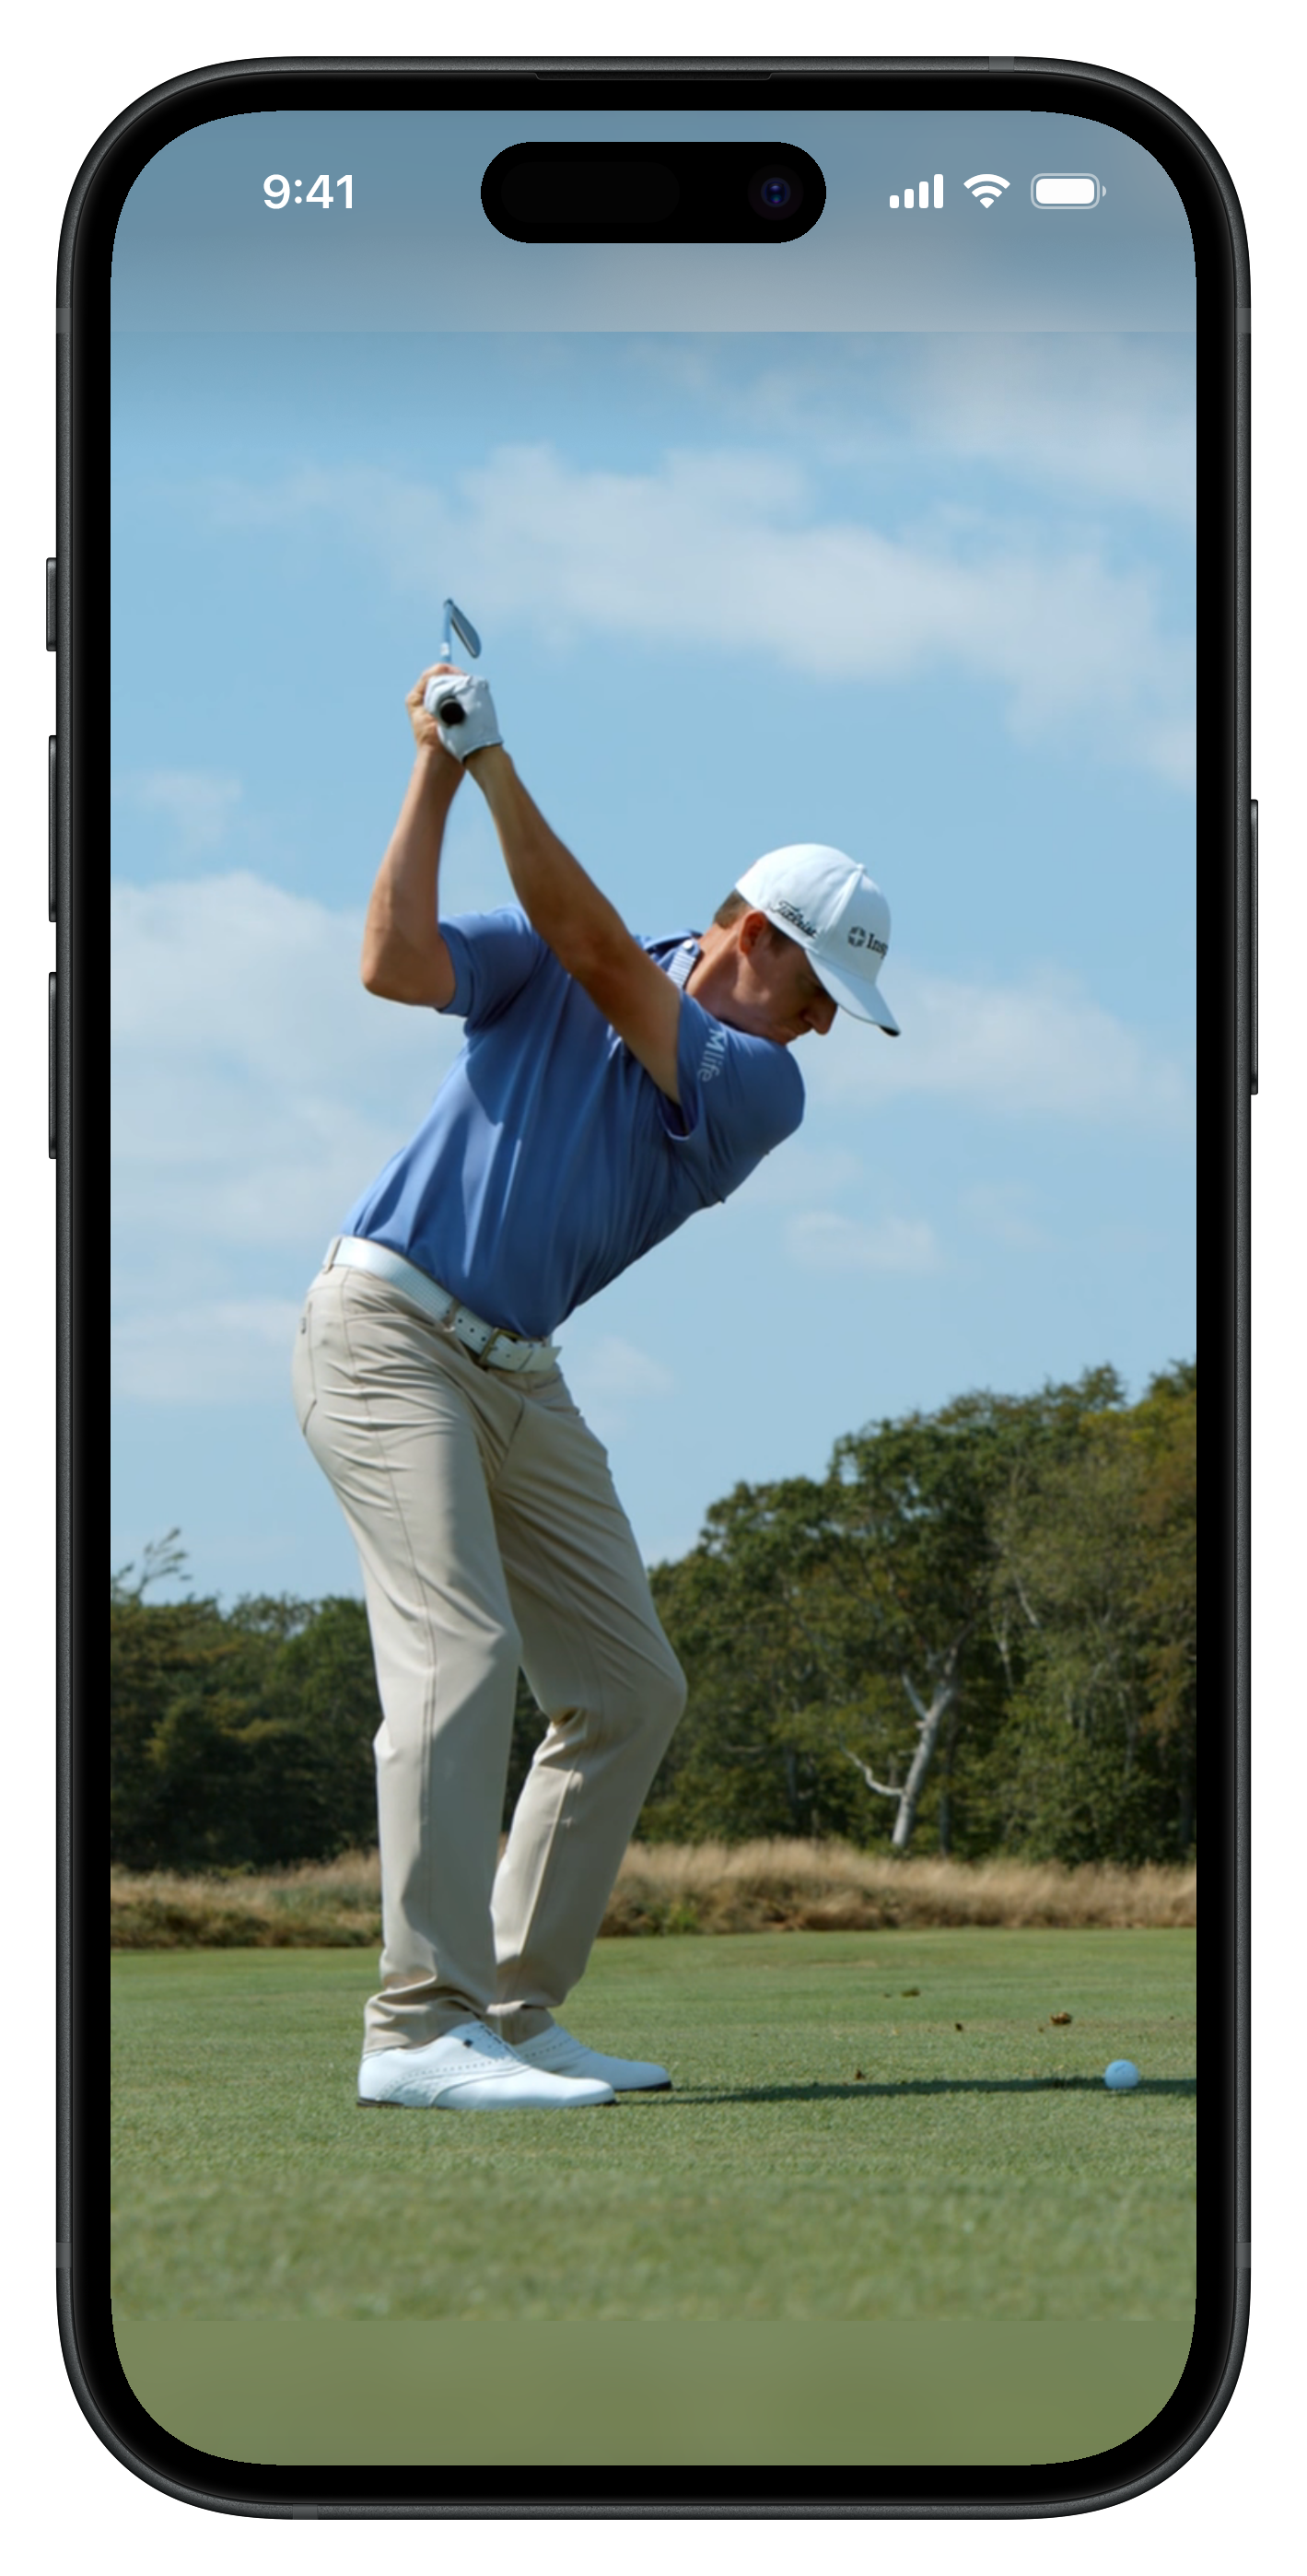 iPhone recording golf swing